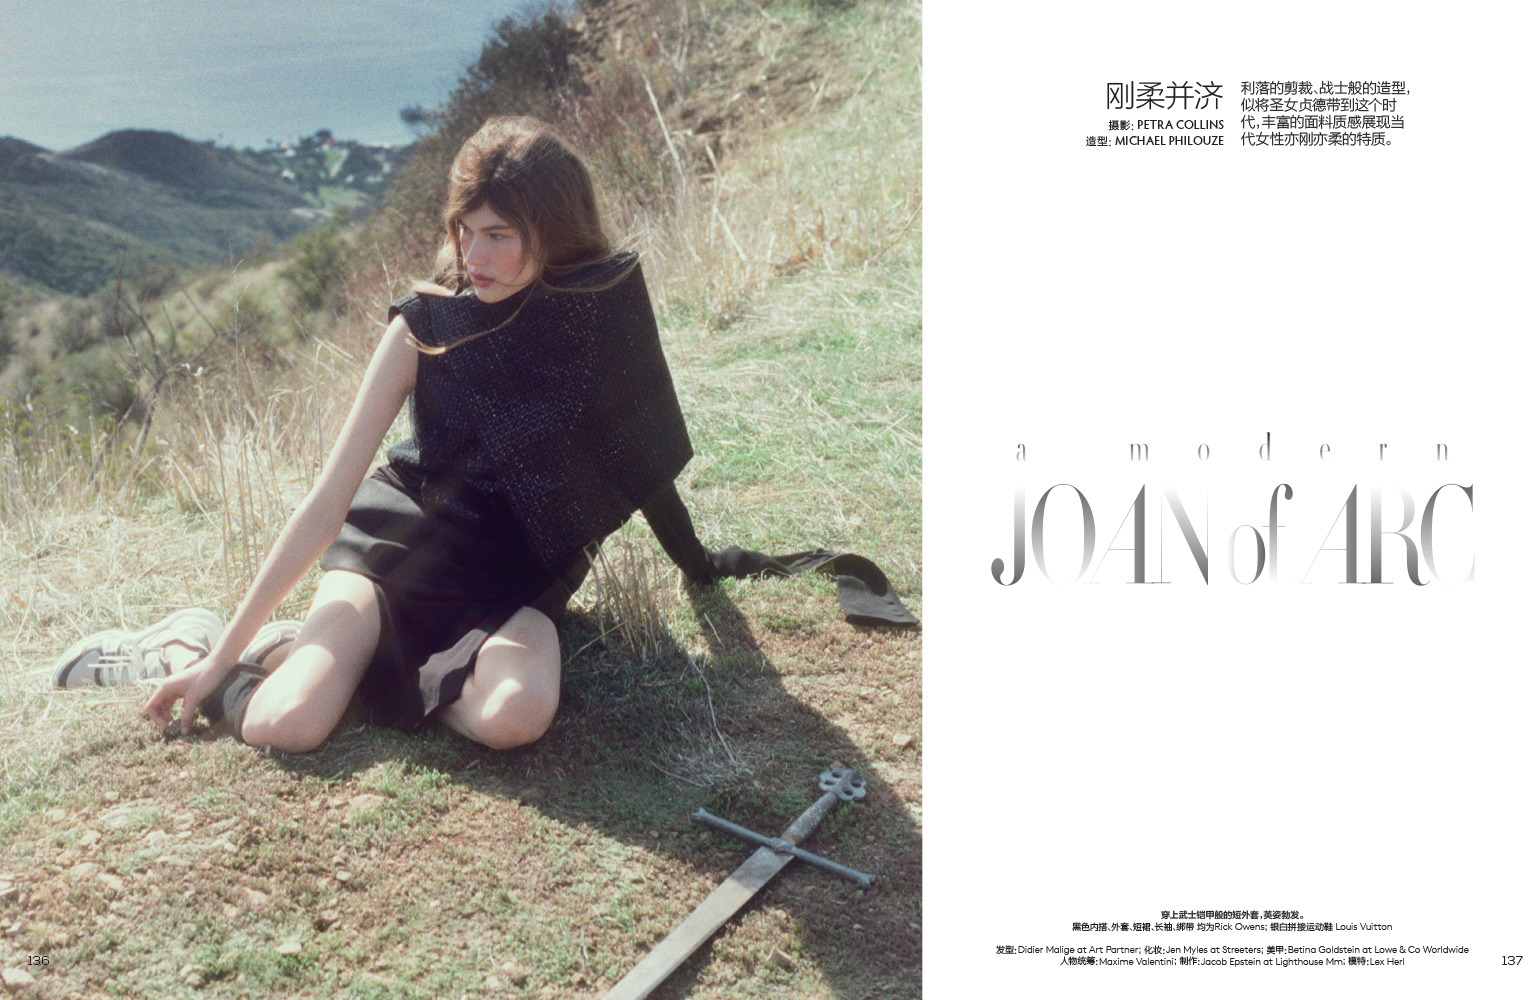 Michael Philouze | Vogue China: Joan of Arc | 1